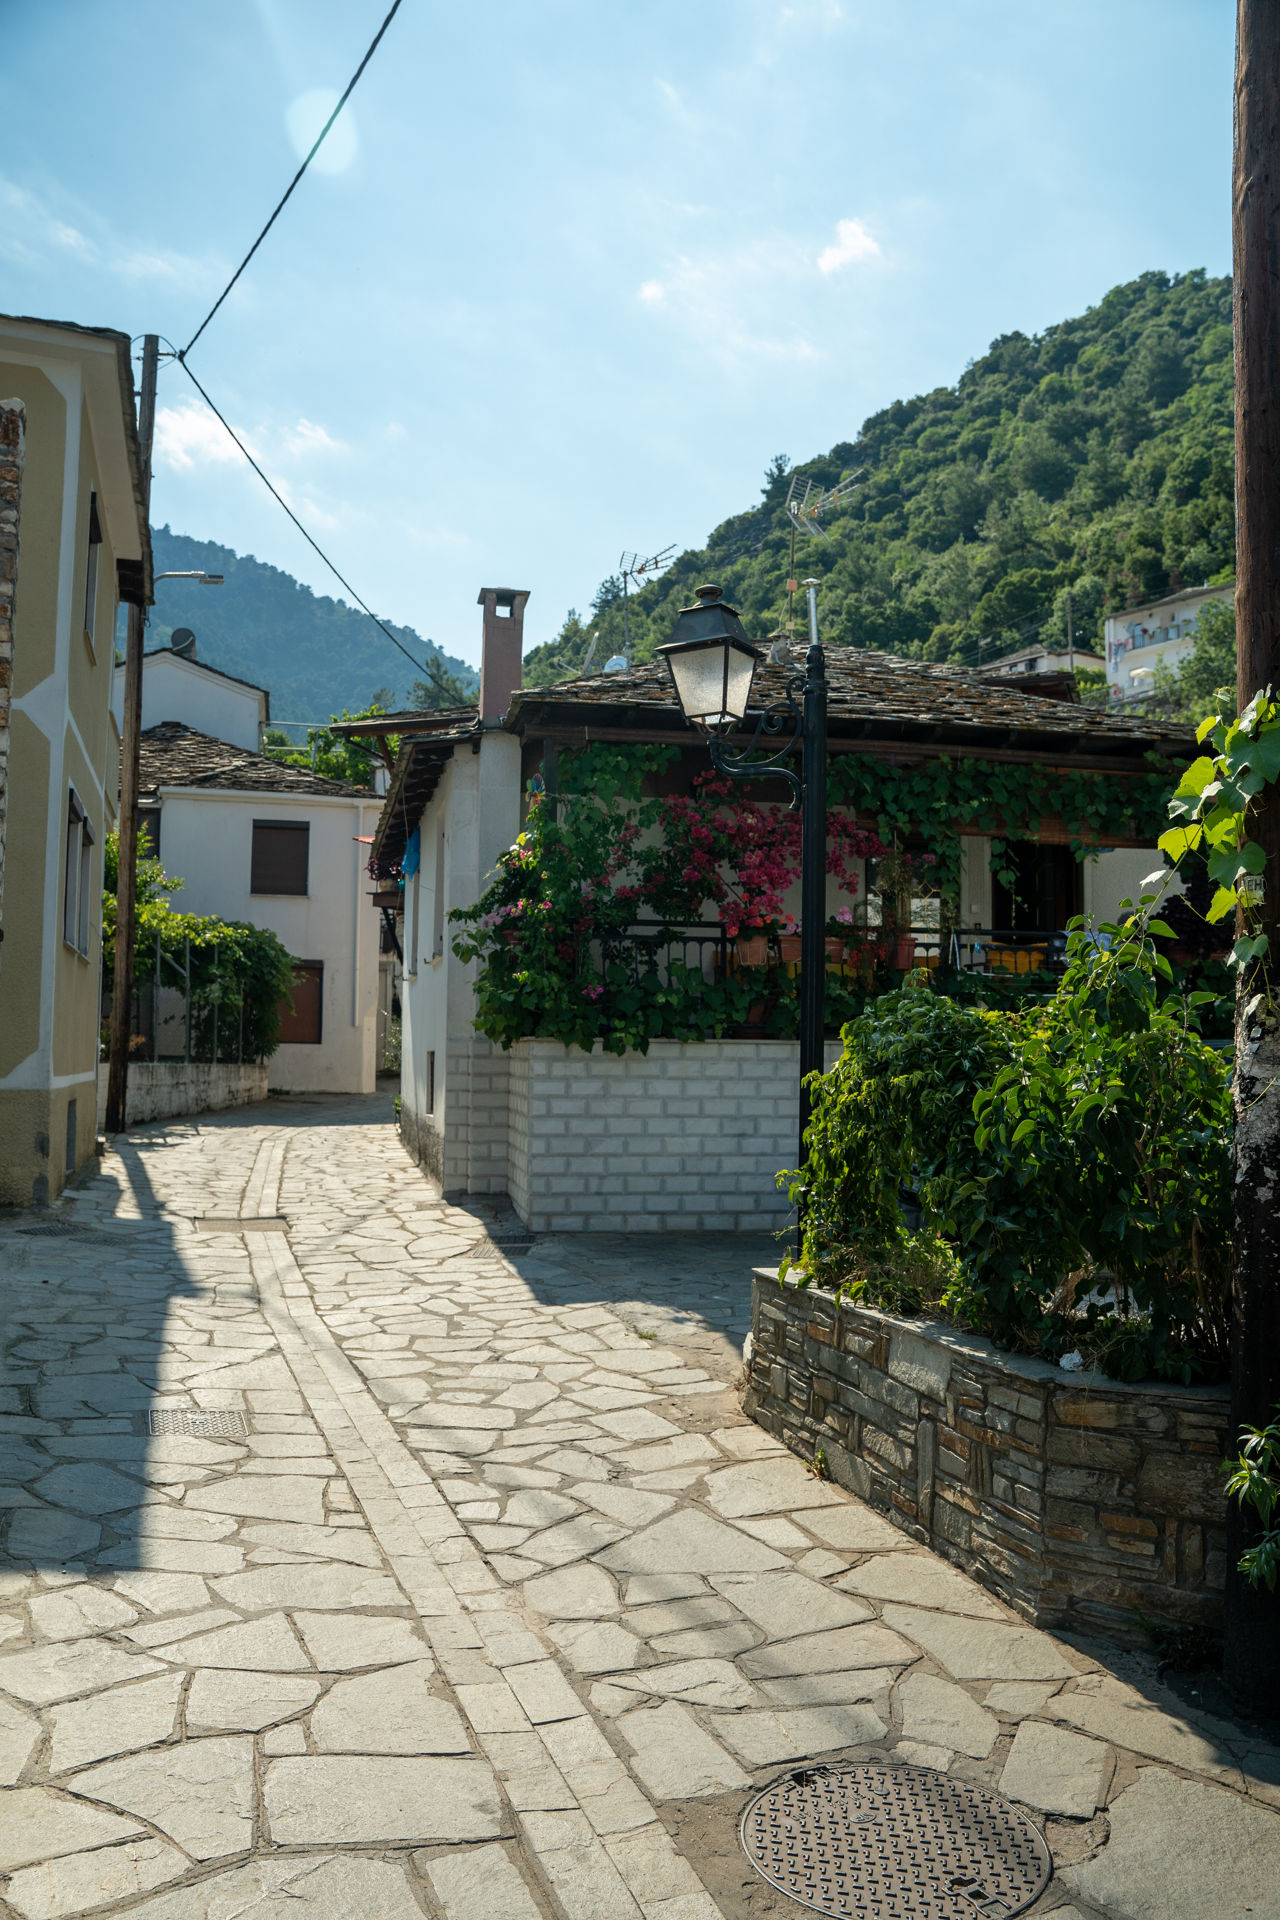 Strolling around the cobblestone streets of Panagia Village